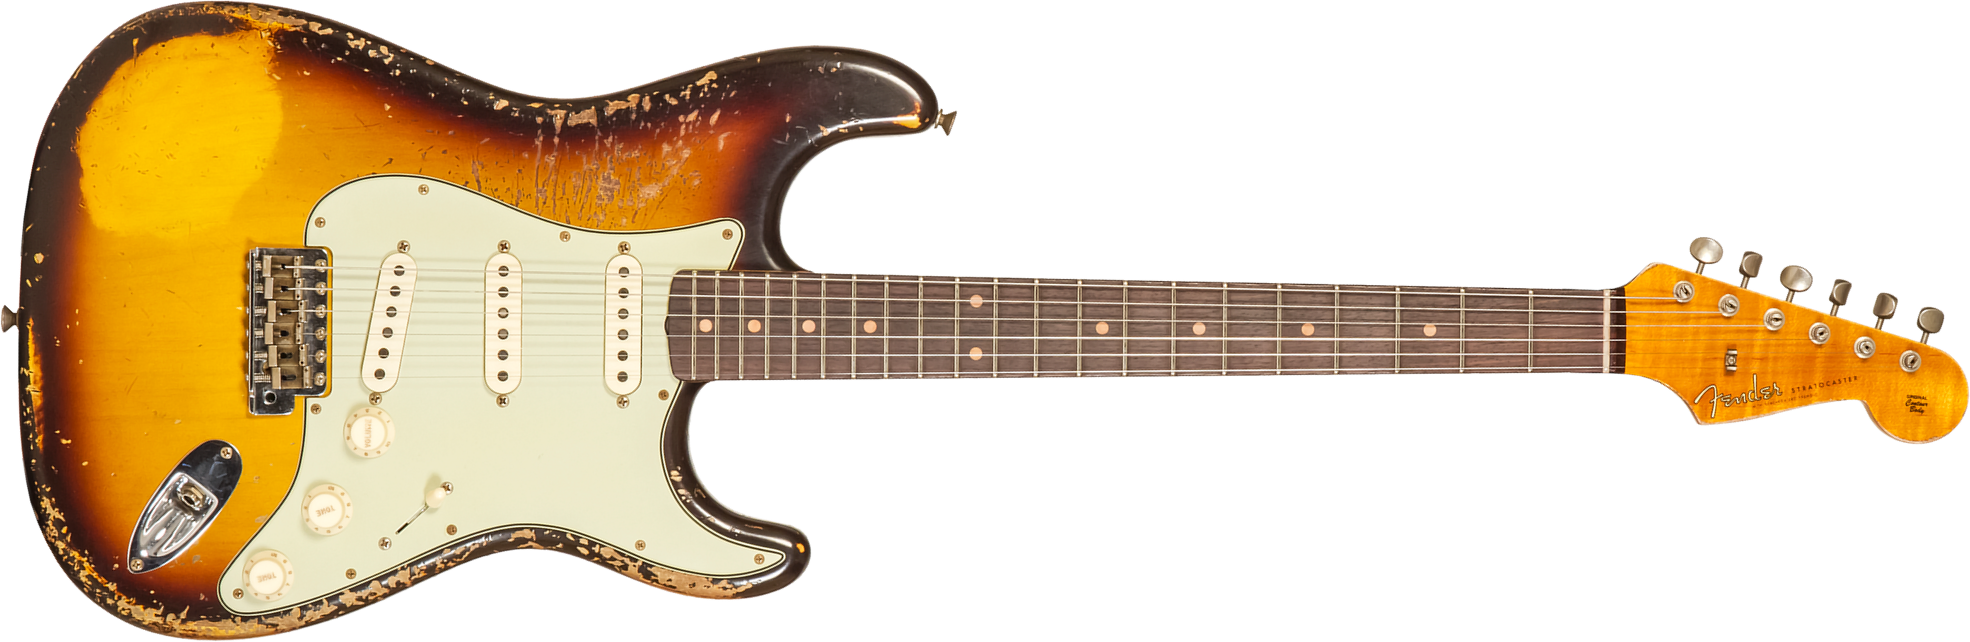 Fender Custom Shop Strat 1959 3s Trem Rw #cz571958 - Super Heavy Relic Aged Chocolate 3-color Sunburst - E-Gitarre in Str-Form - Main picture